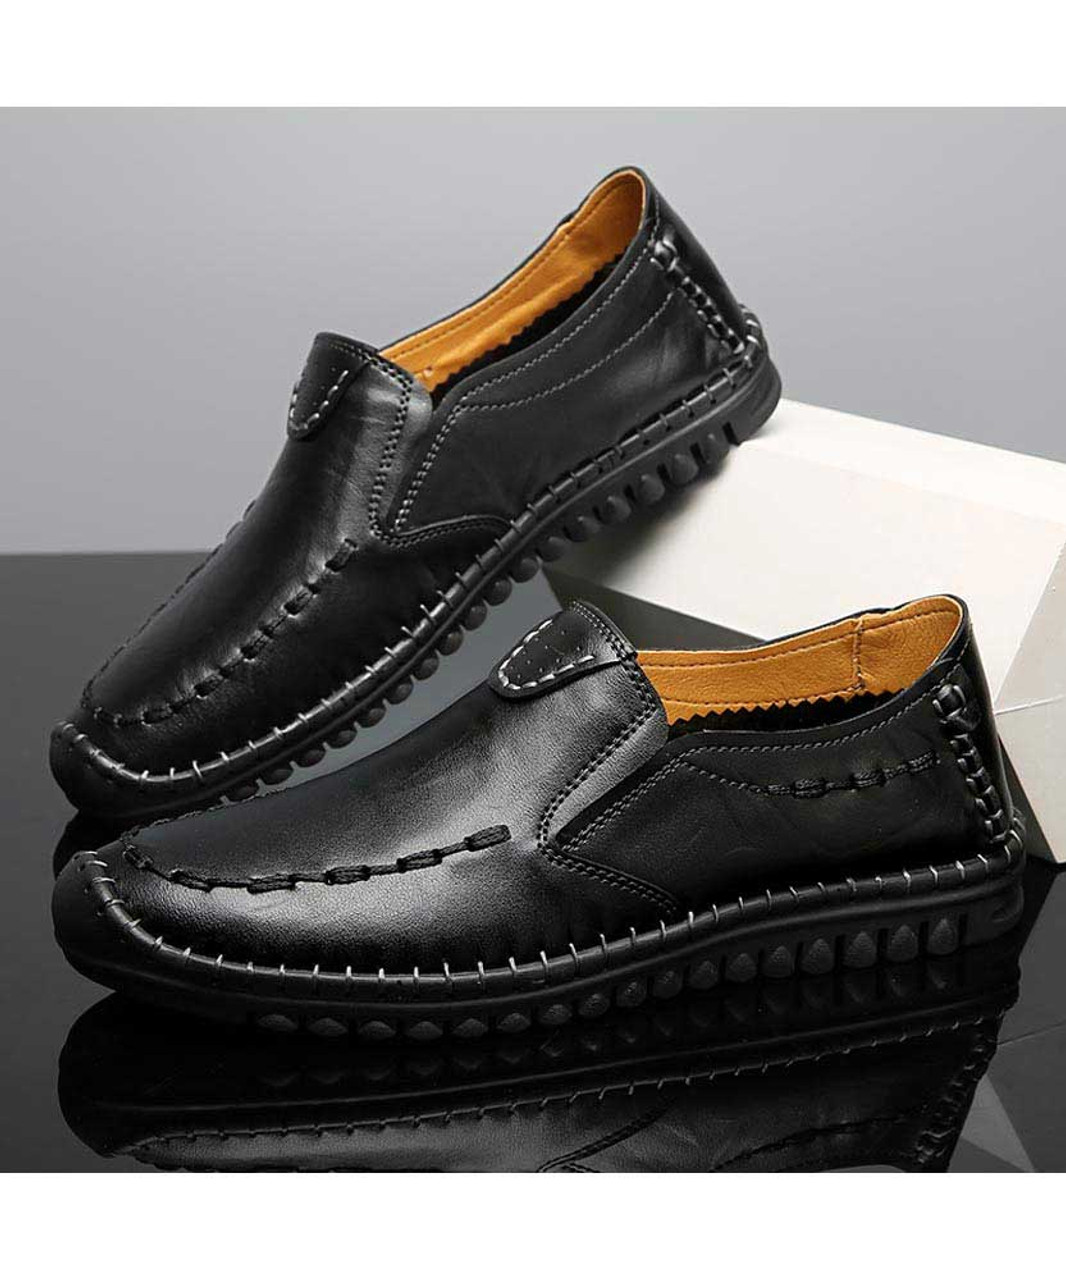 Black retro sewed leather slip on shoe loafer | Mens shoe loafers ...